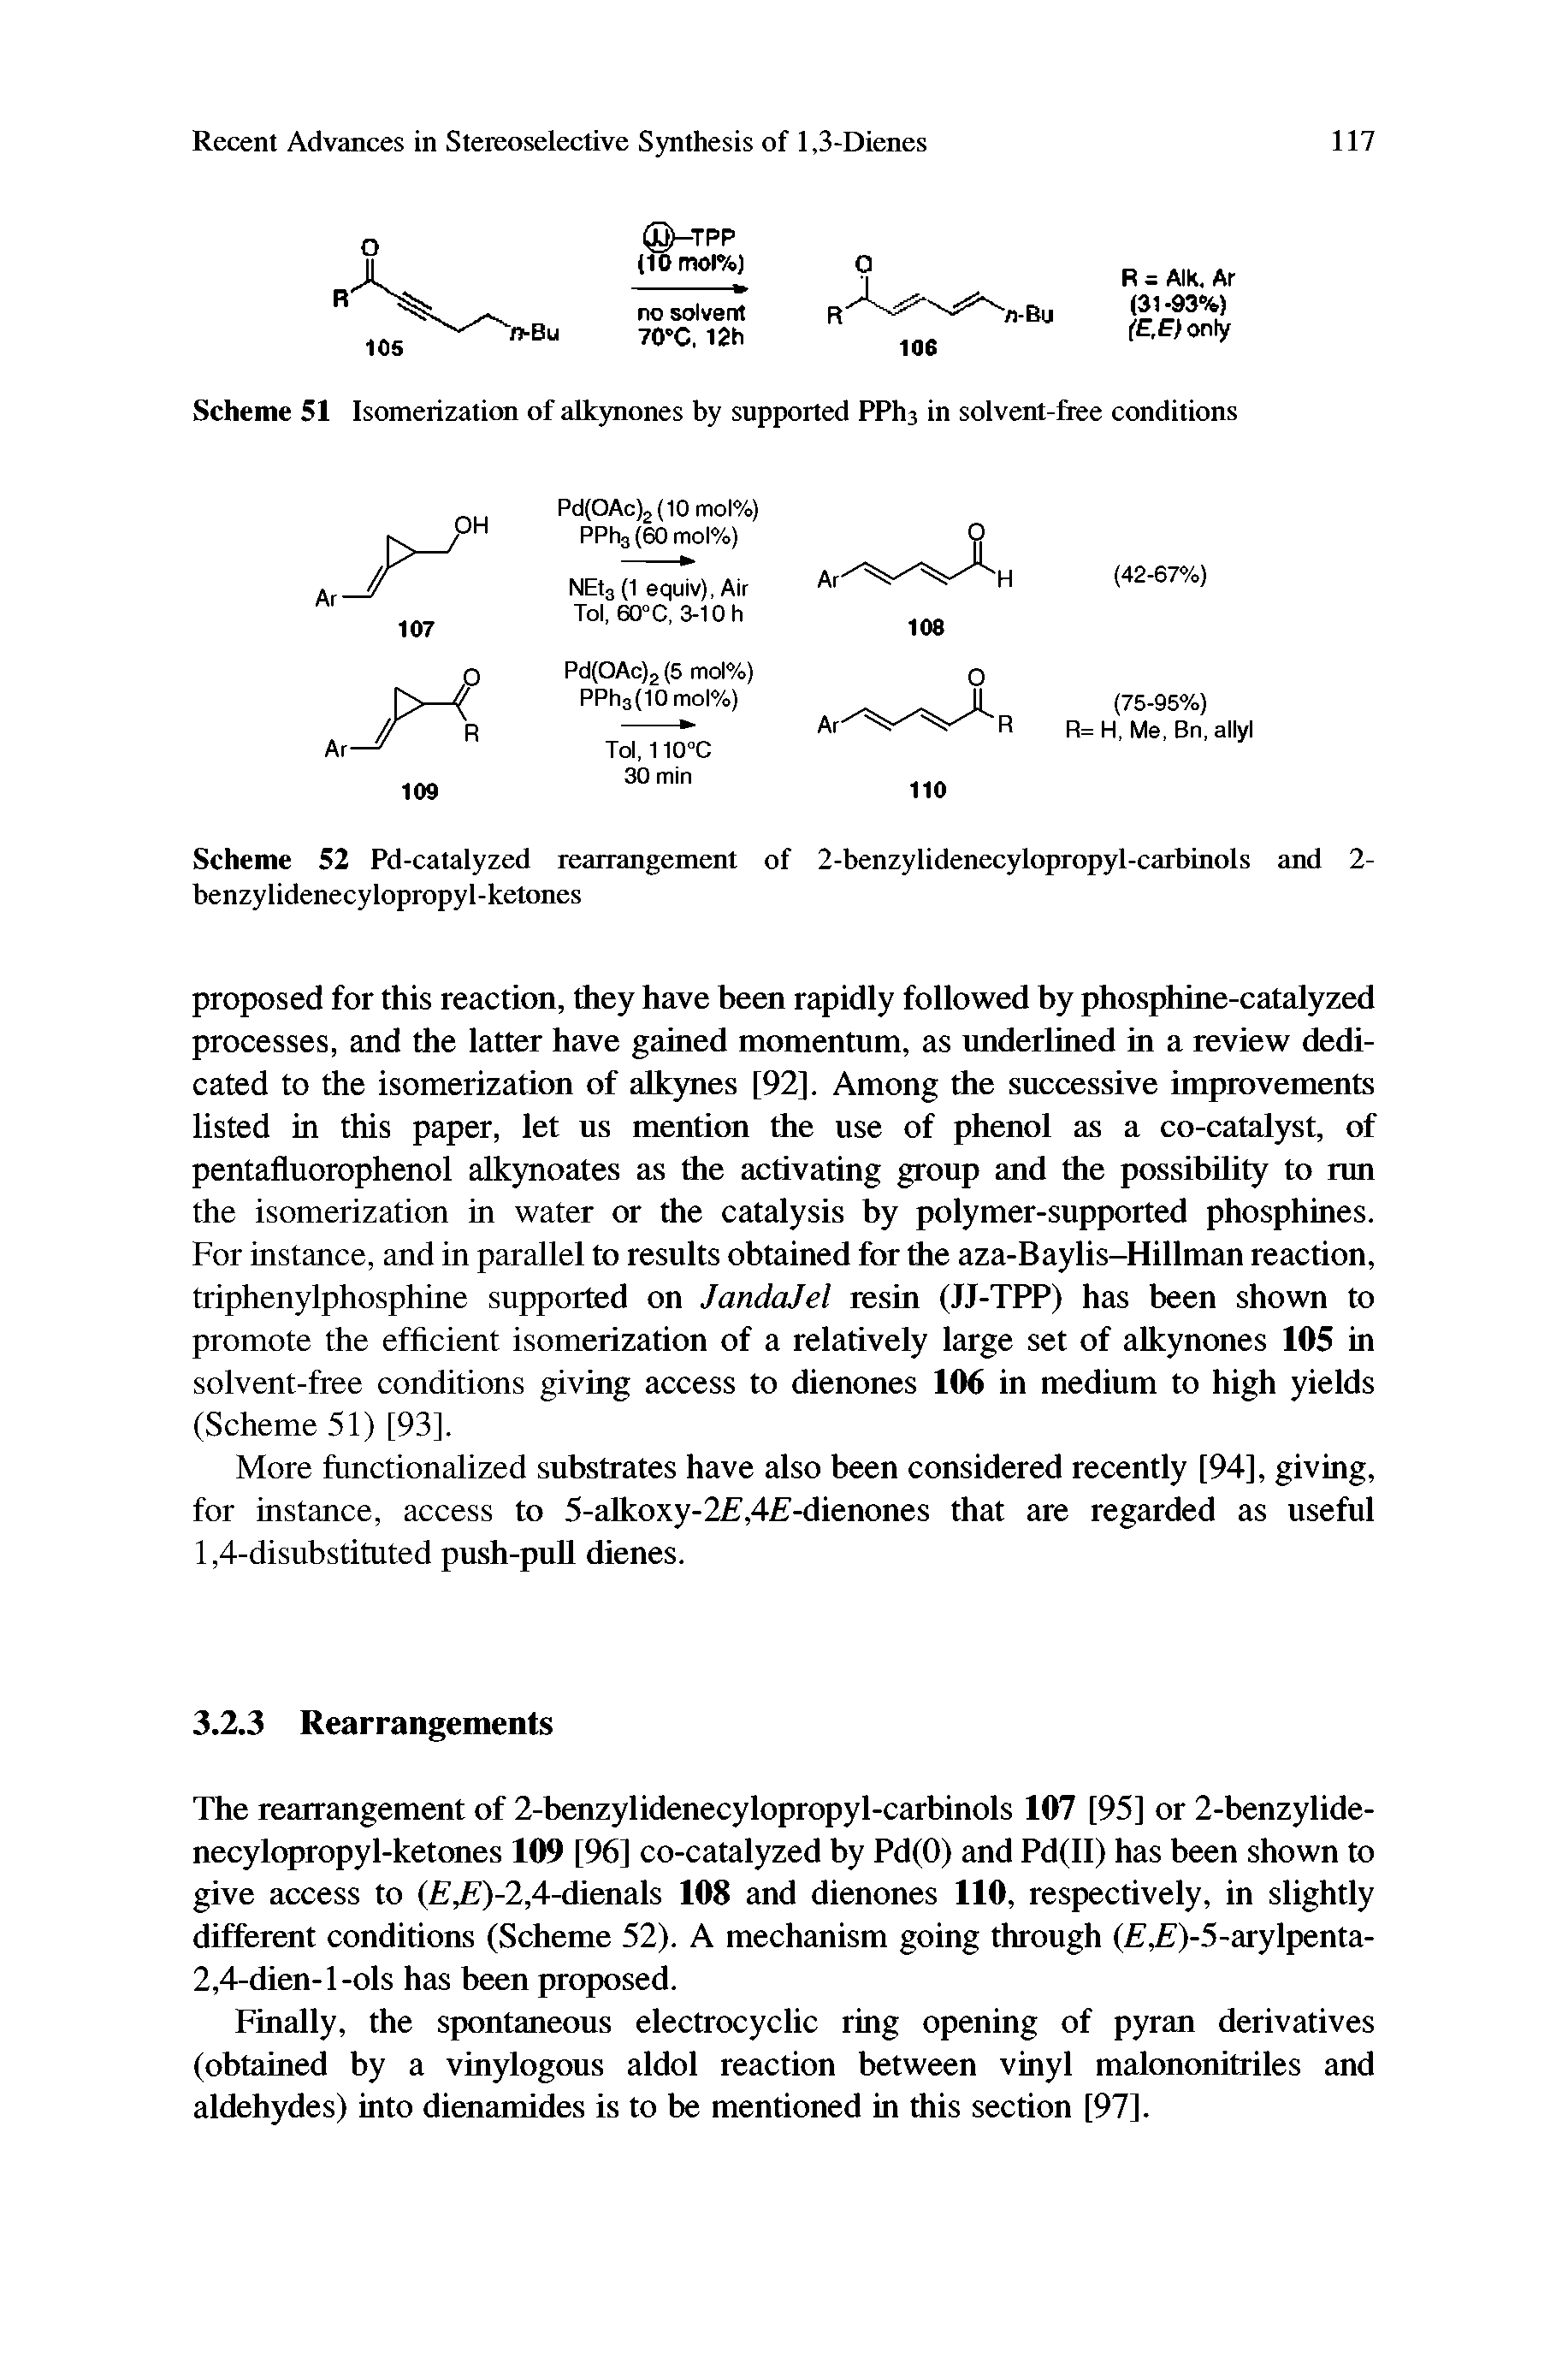 Scheme 52 Pd-catalyzed rearrangement of 2-benzylidenecylopropyl-carbinols and 2-benzylidenecylopropyl-ketones...